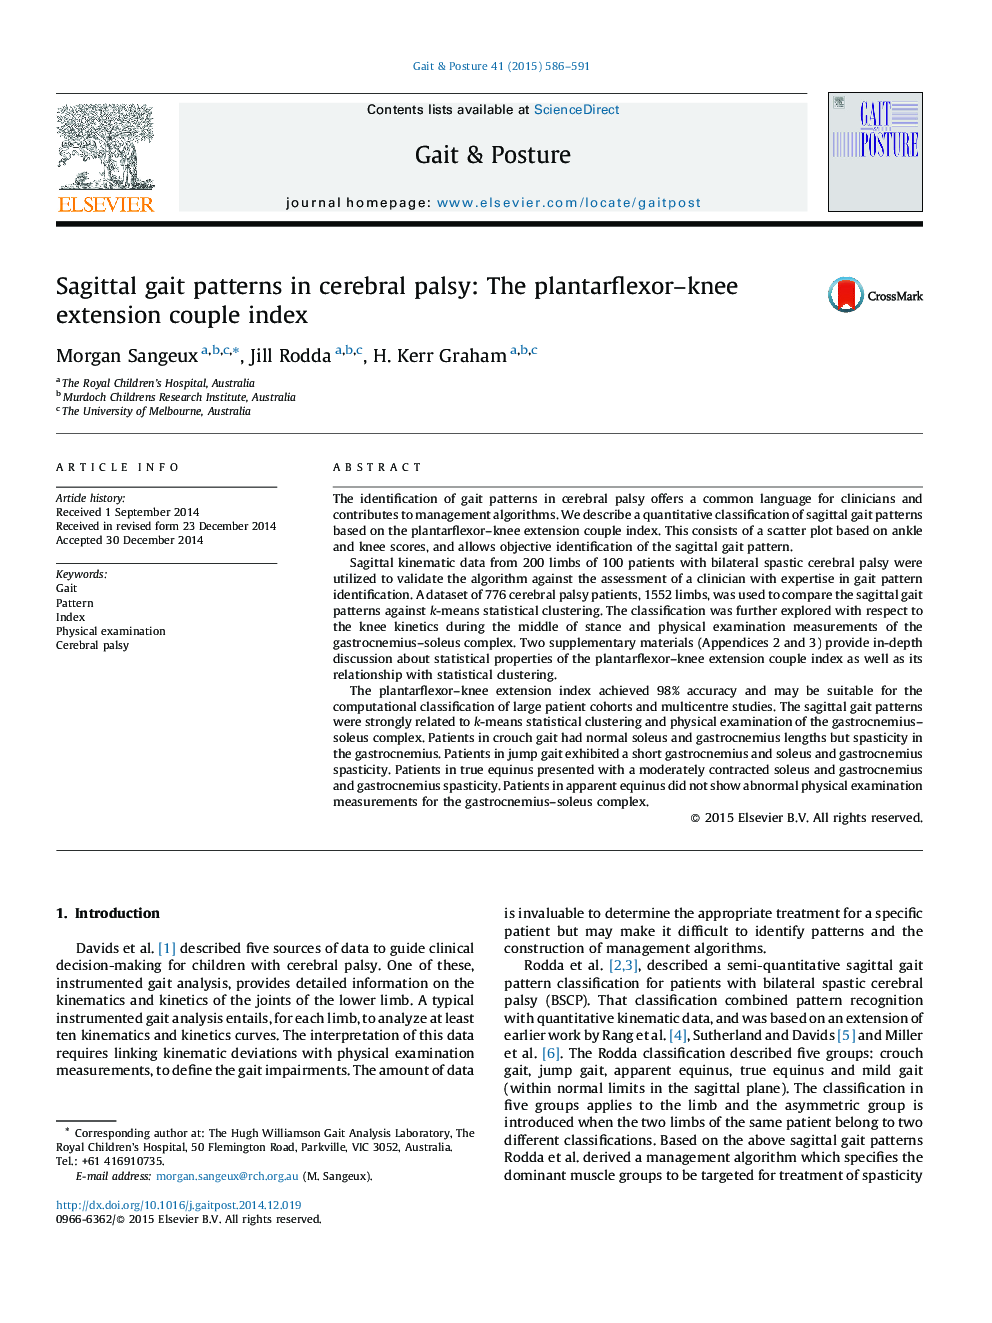 Sagittal gait patterns in cerebral palsy: The plantarflexor-knee extension couple index